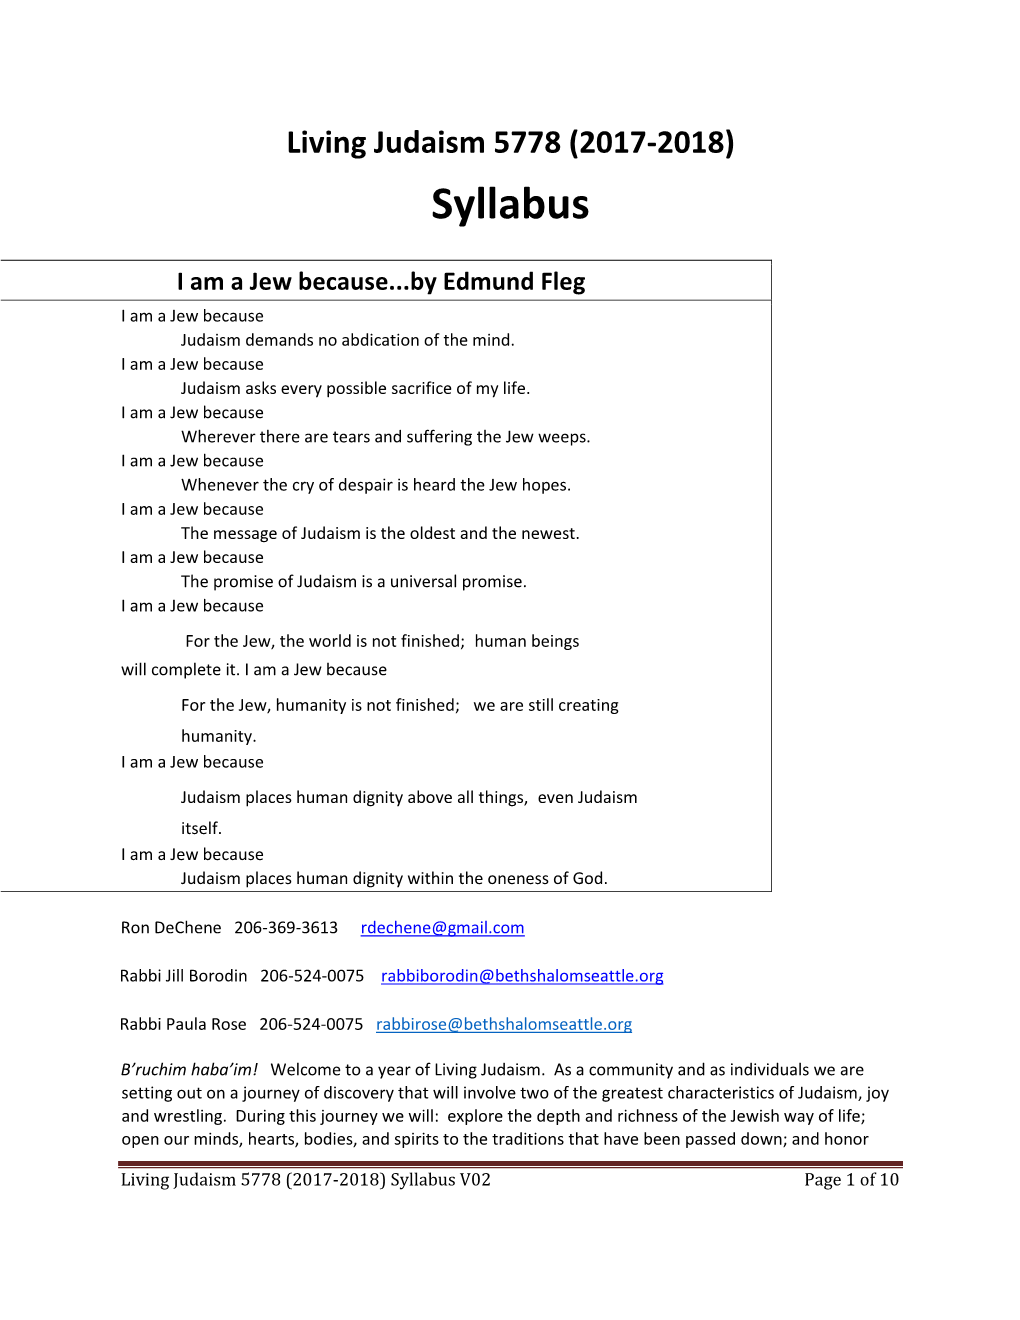 Living Judaism 5778 (2017-2018) Syllabus